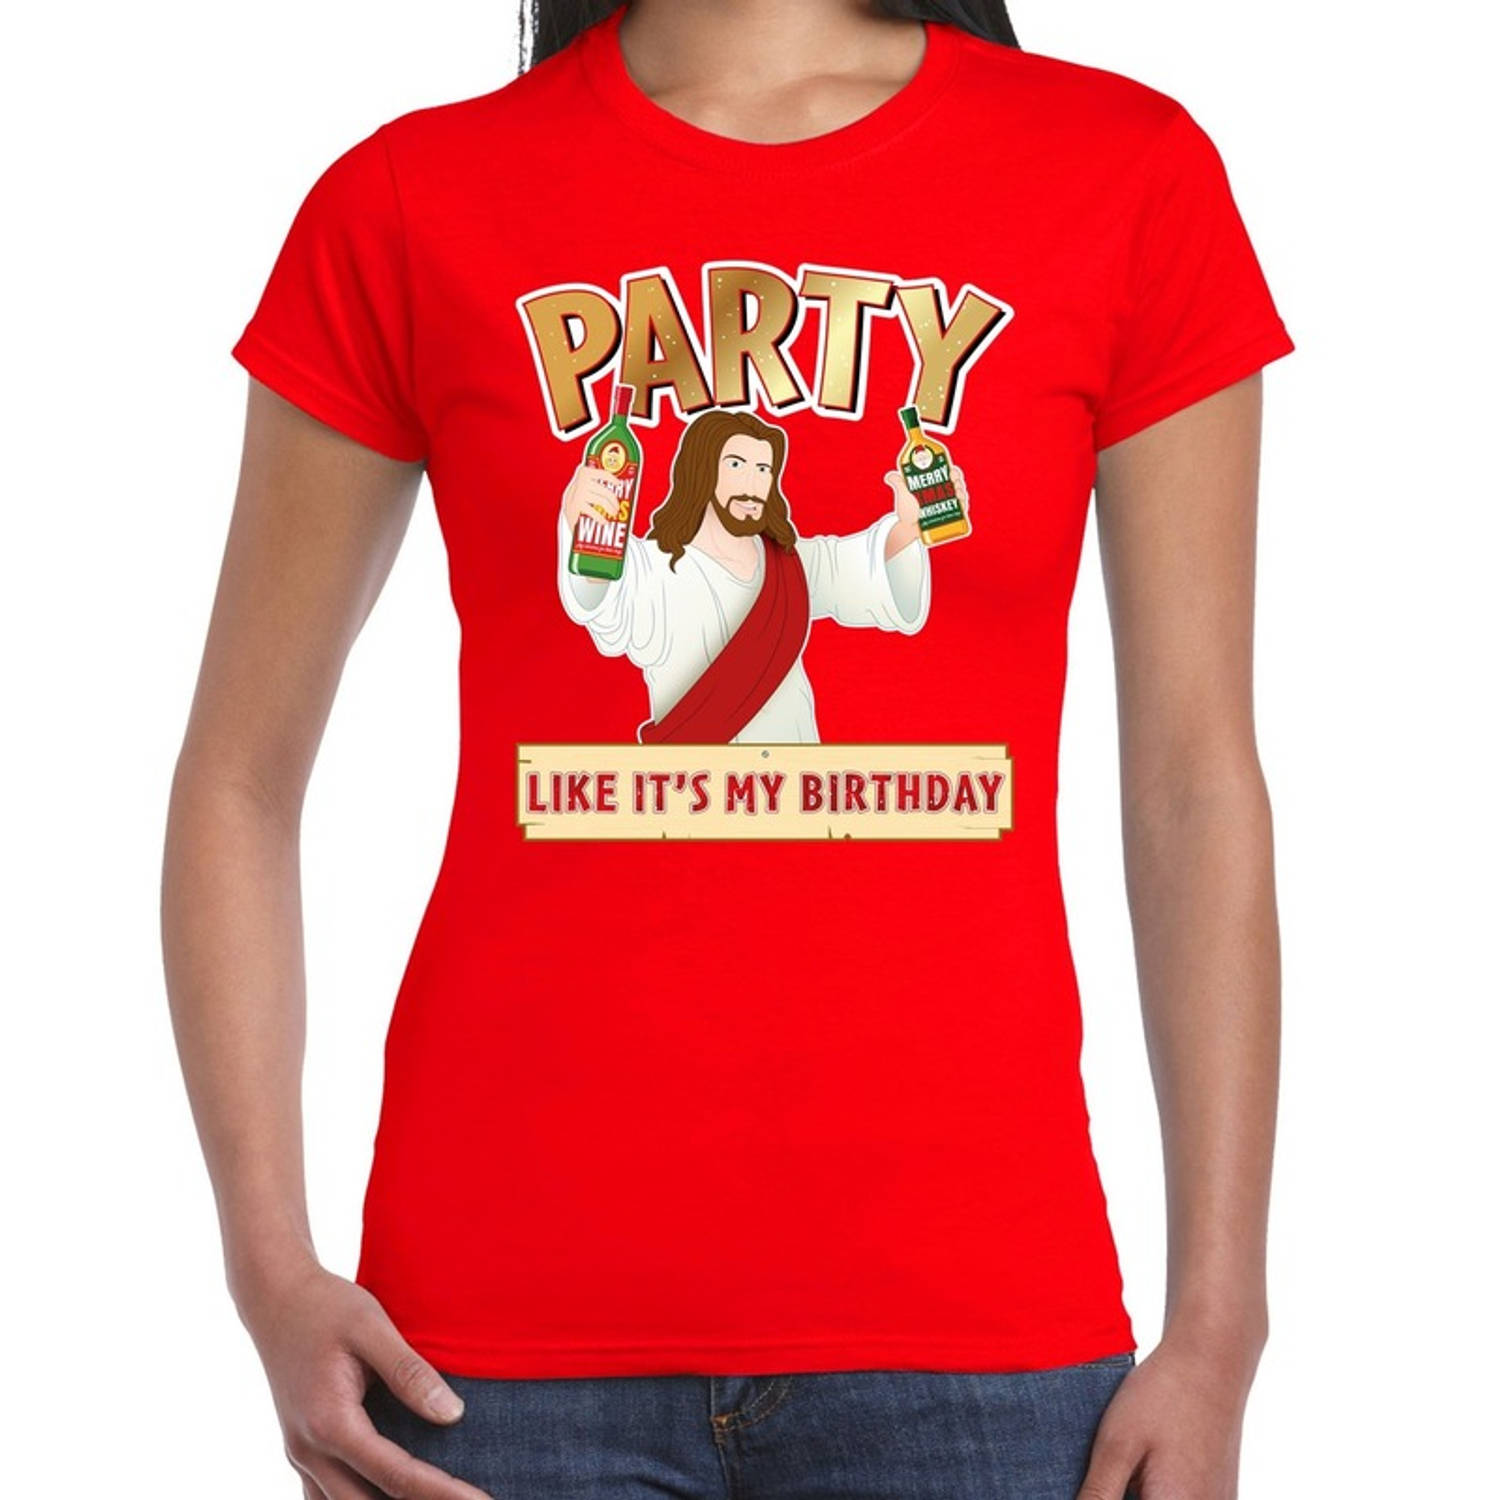 Rood kerstshirt / kerstkleding met party Jezus voor dames M - kerst t-shirts